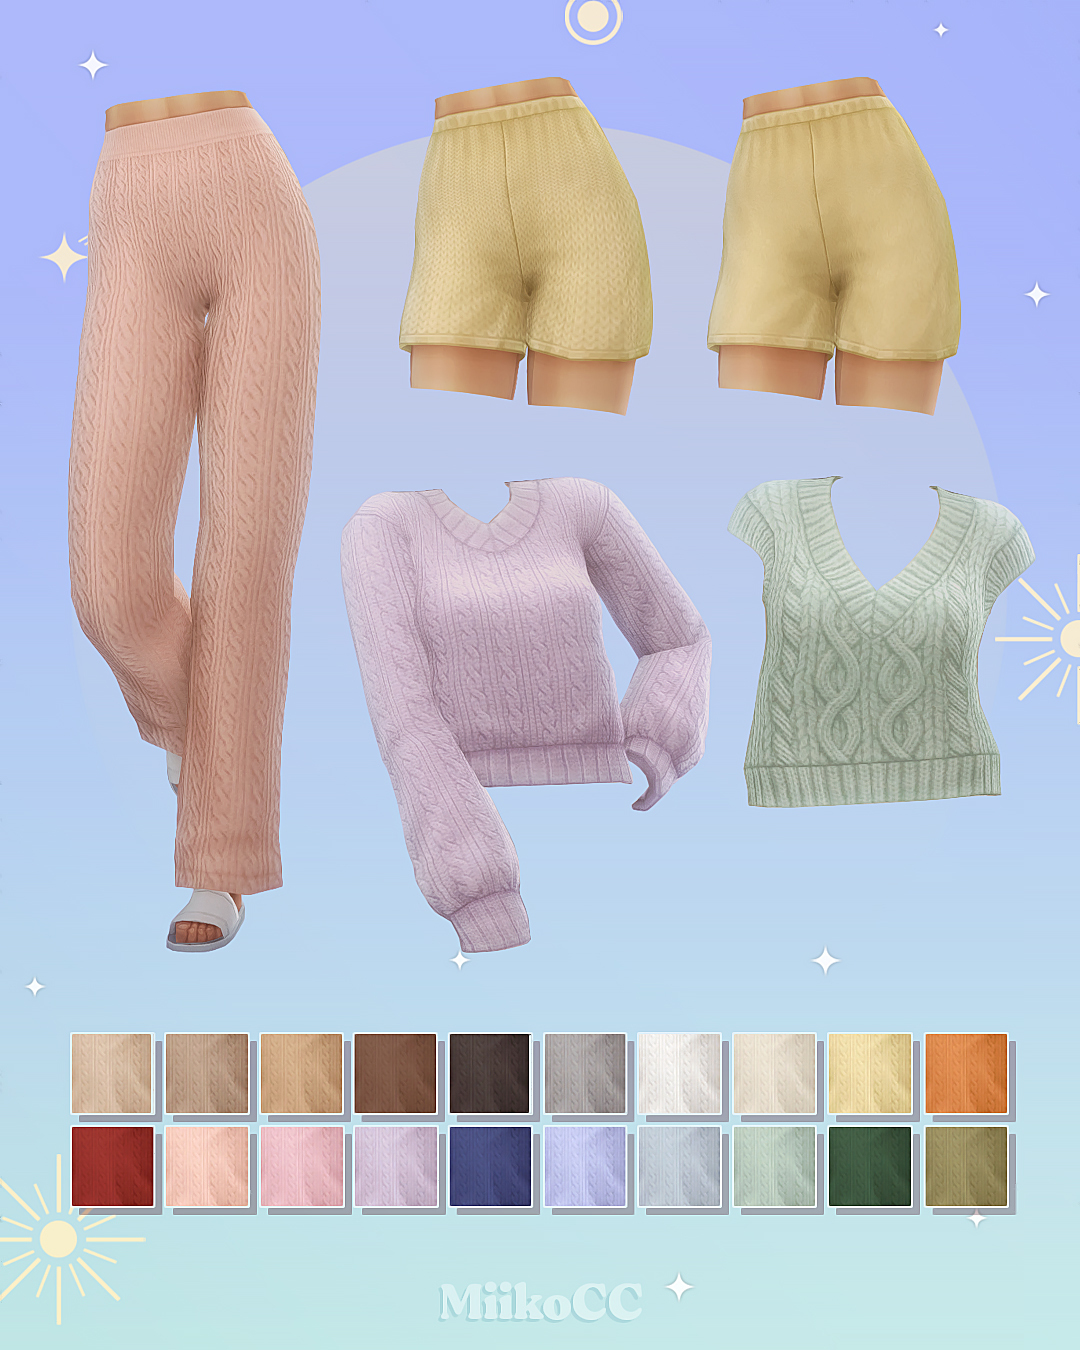 extra cozy clothing set - The Sims 4 Create a Sim - CurseForge